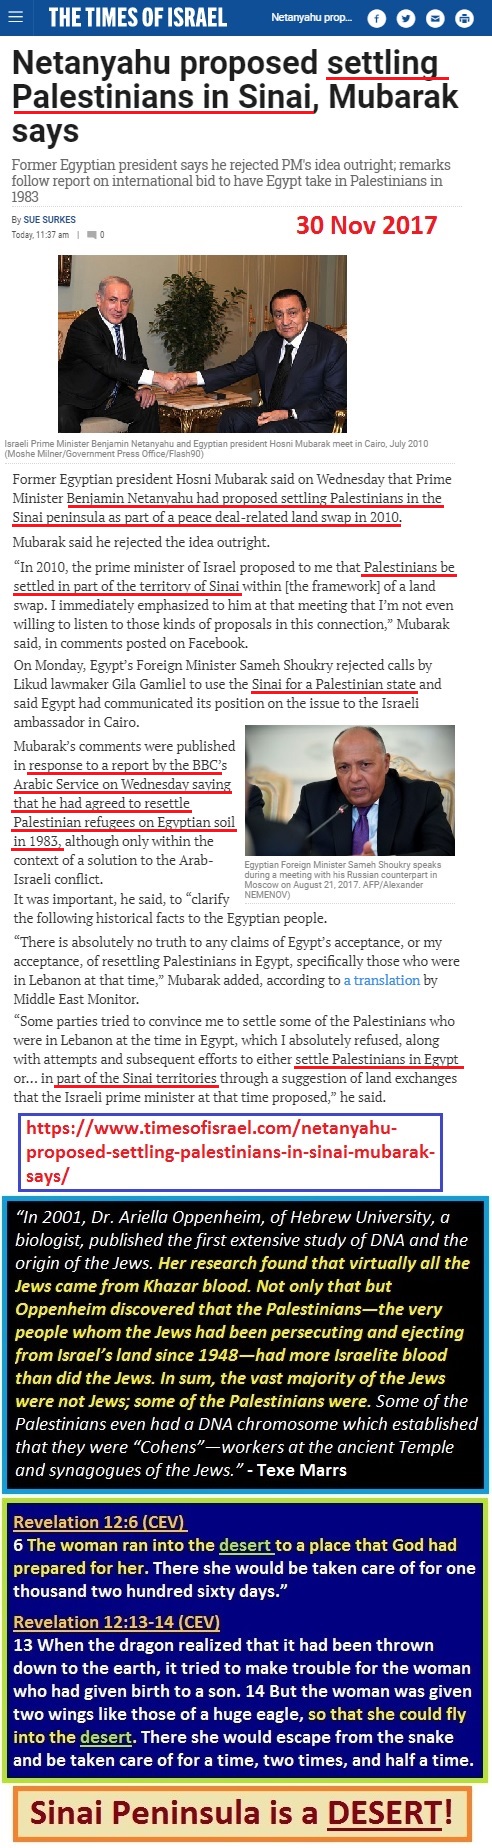 https://www.timesofisrael.com/netanyahu-proposed-settling-palestinians-in-sinai-mubarak-says/